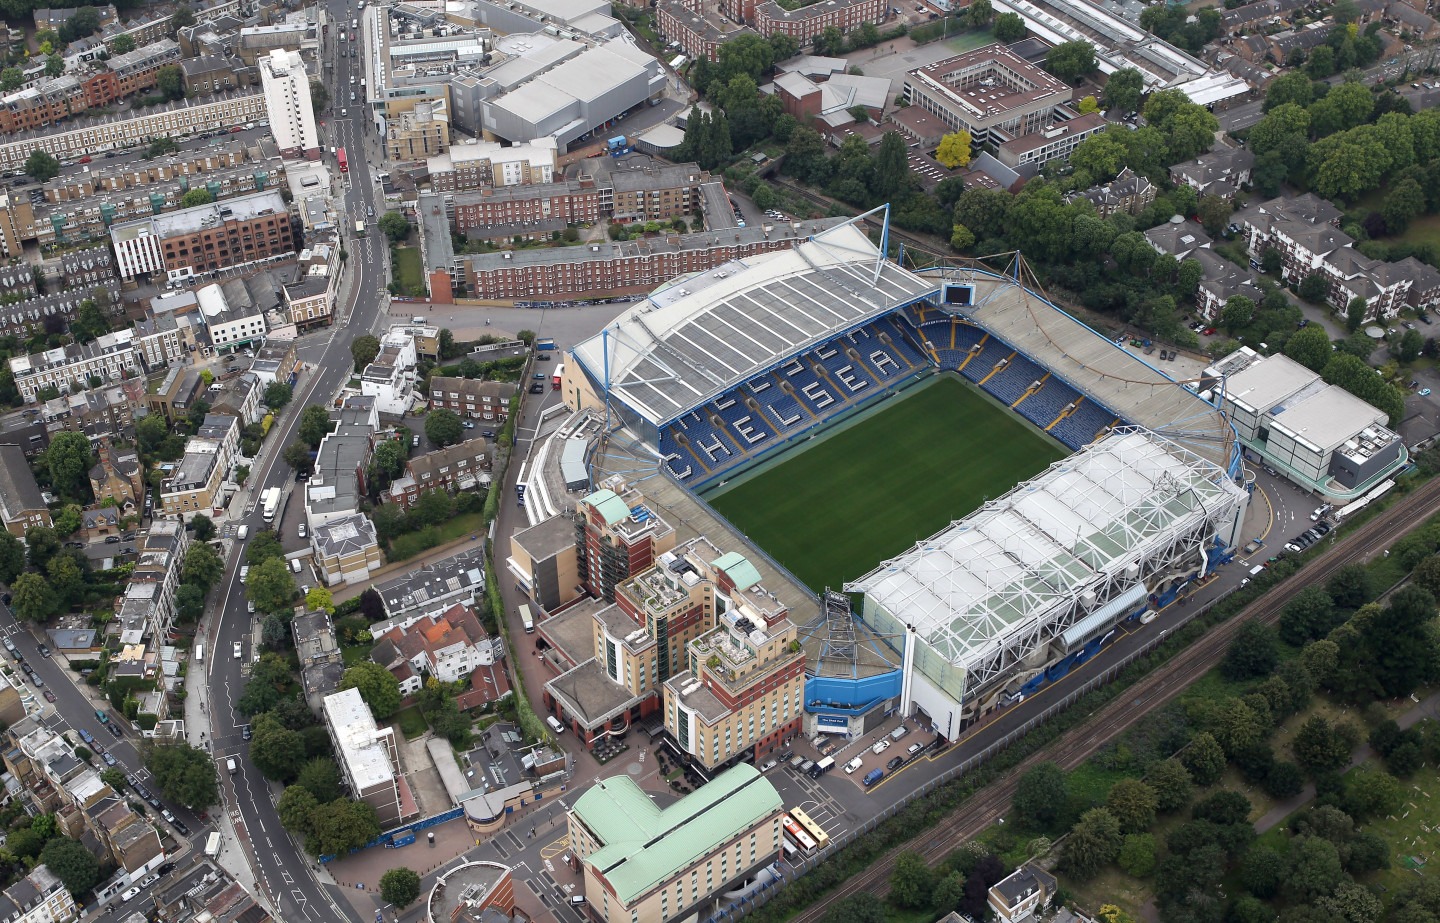 File:Stamford Bridge (1).jpg - Wikipedia